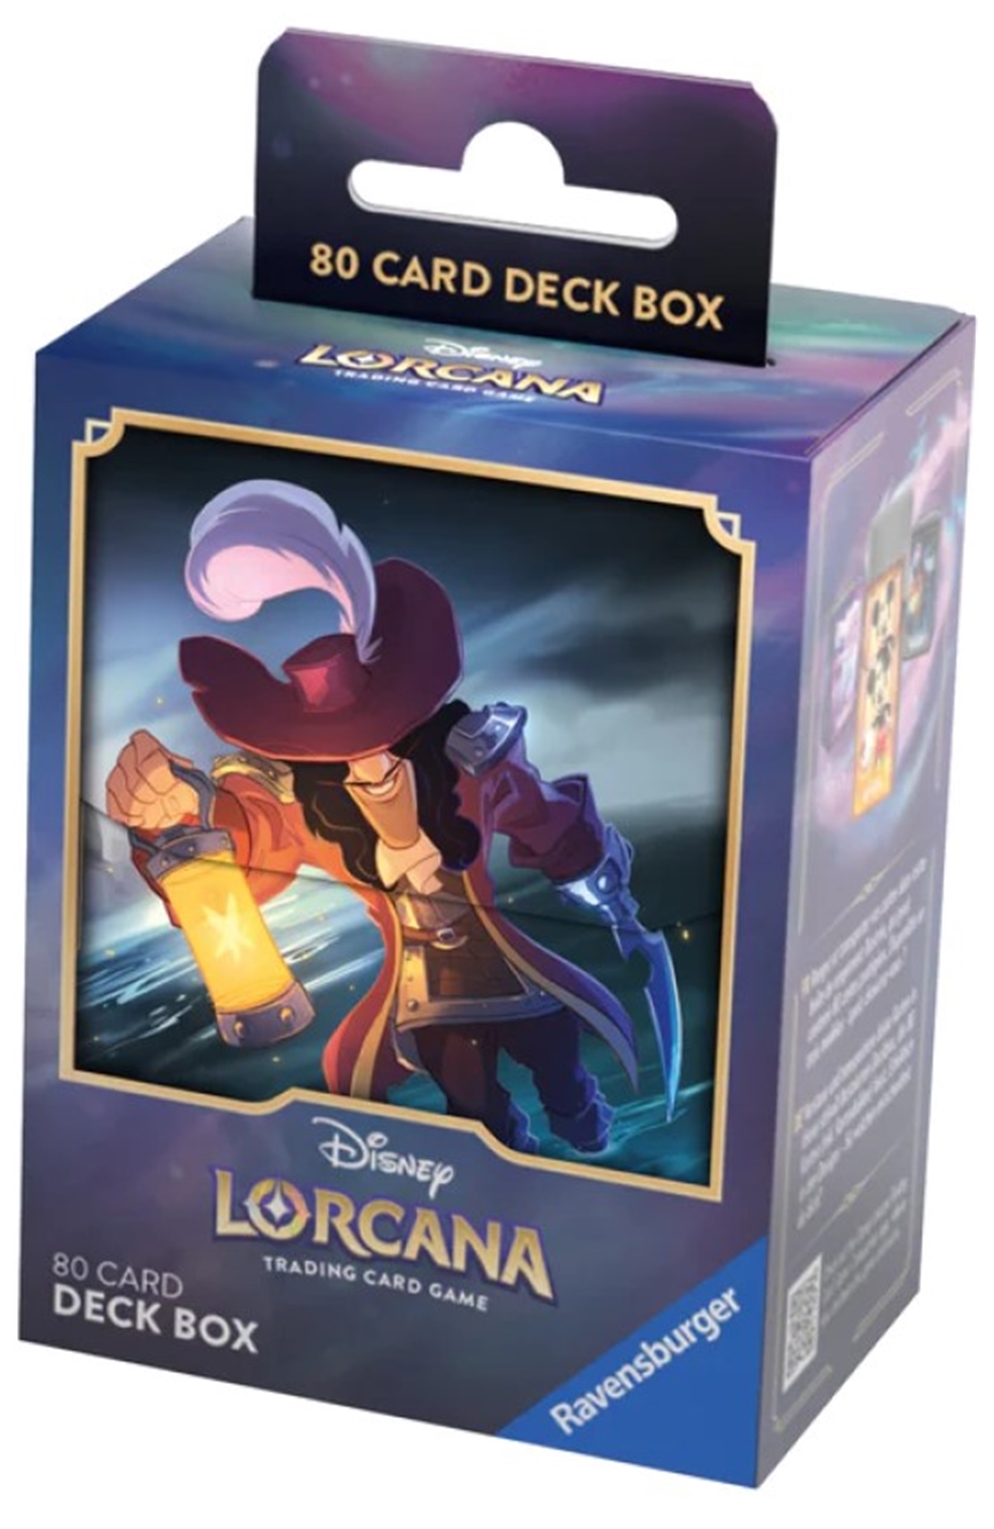 Disney Lorcana TCG: The First Chapter Deck Box - Captain Hook